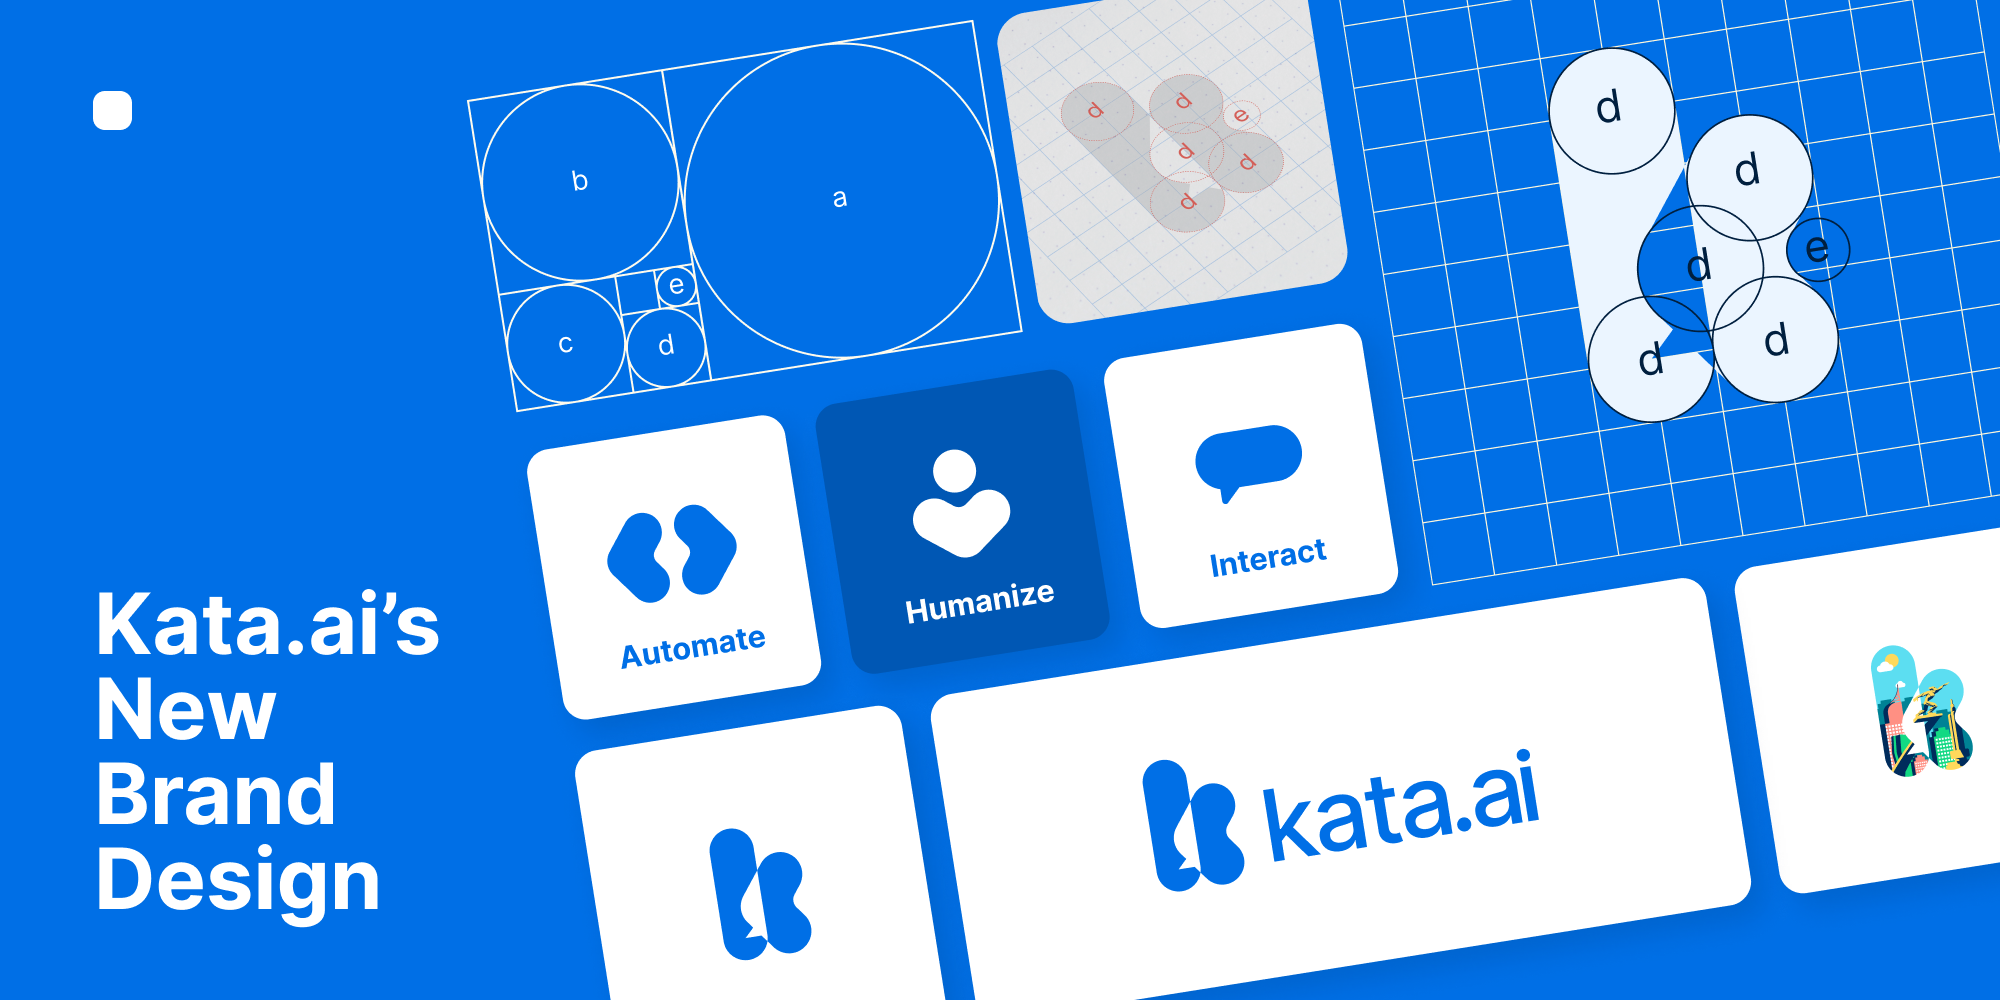 Introducing Kata.ai’s New Brand Design